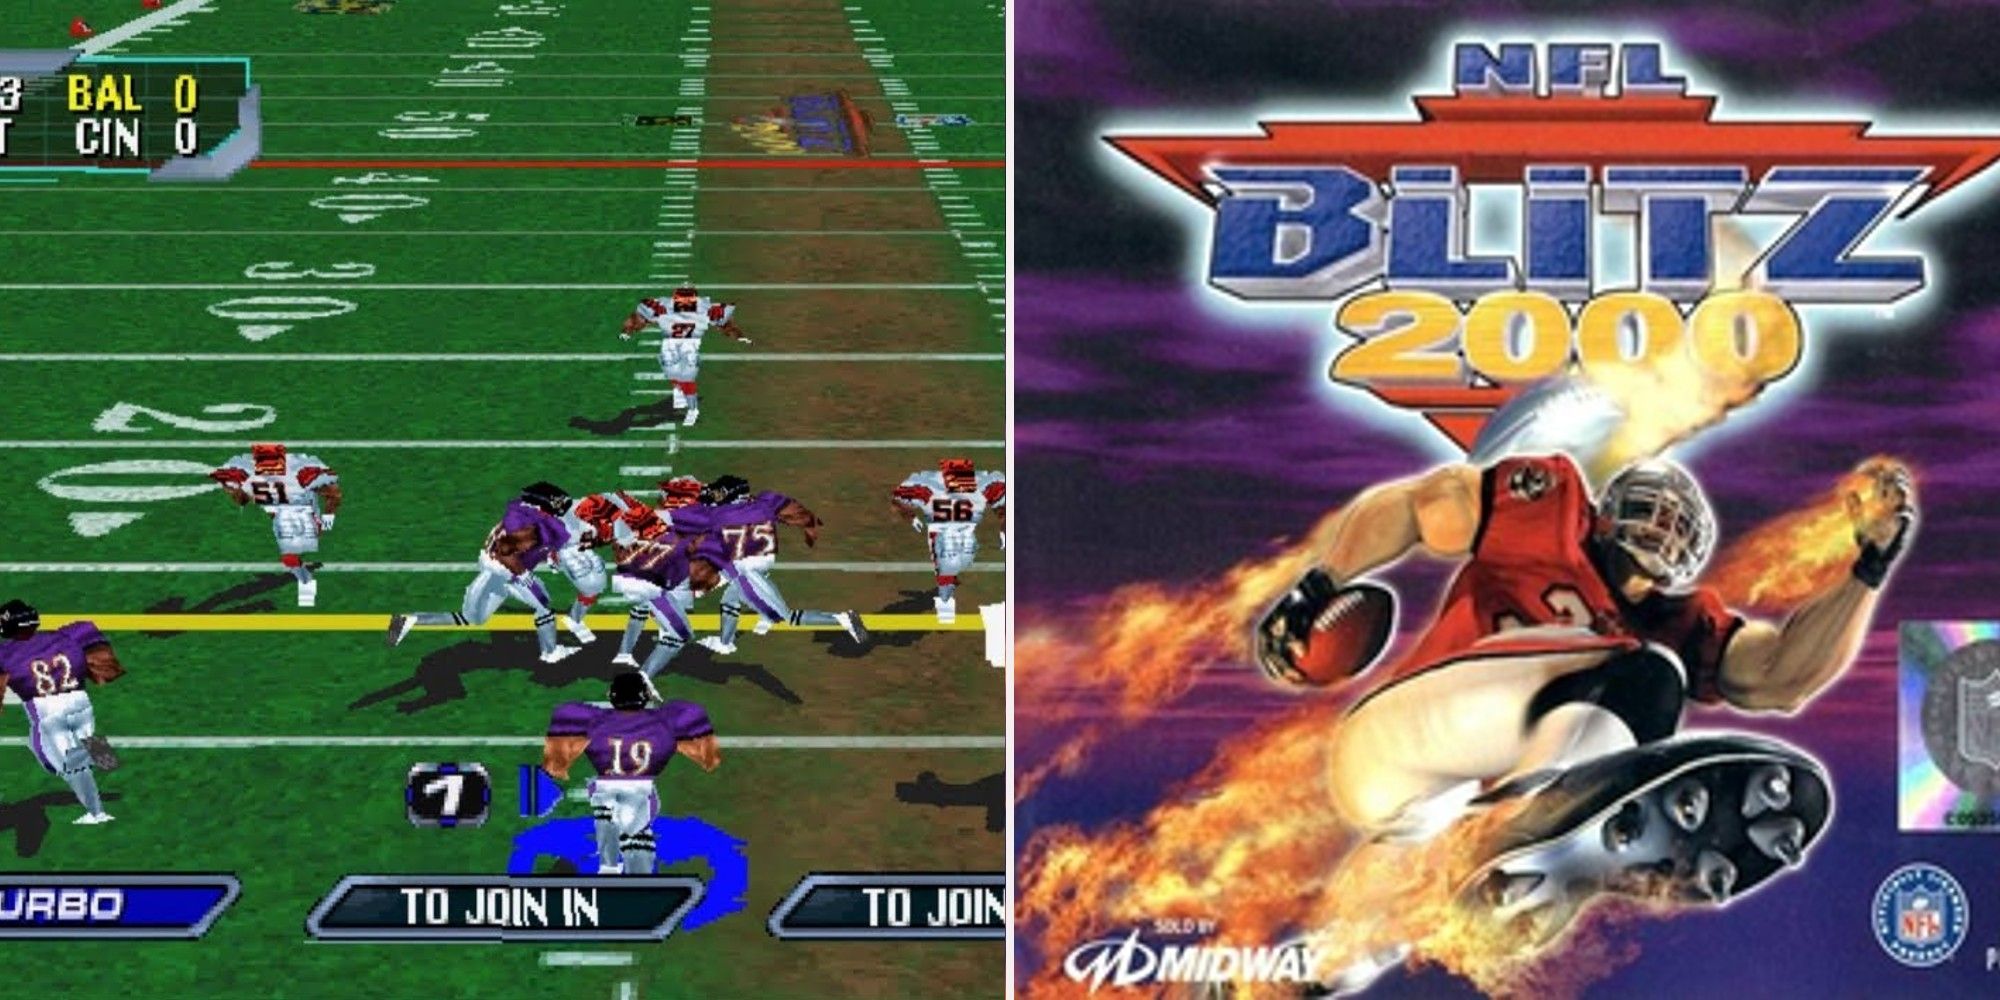 NFL Blitz 2000 Gameplay and boxart